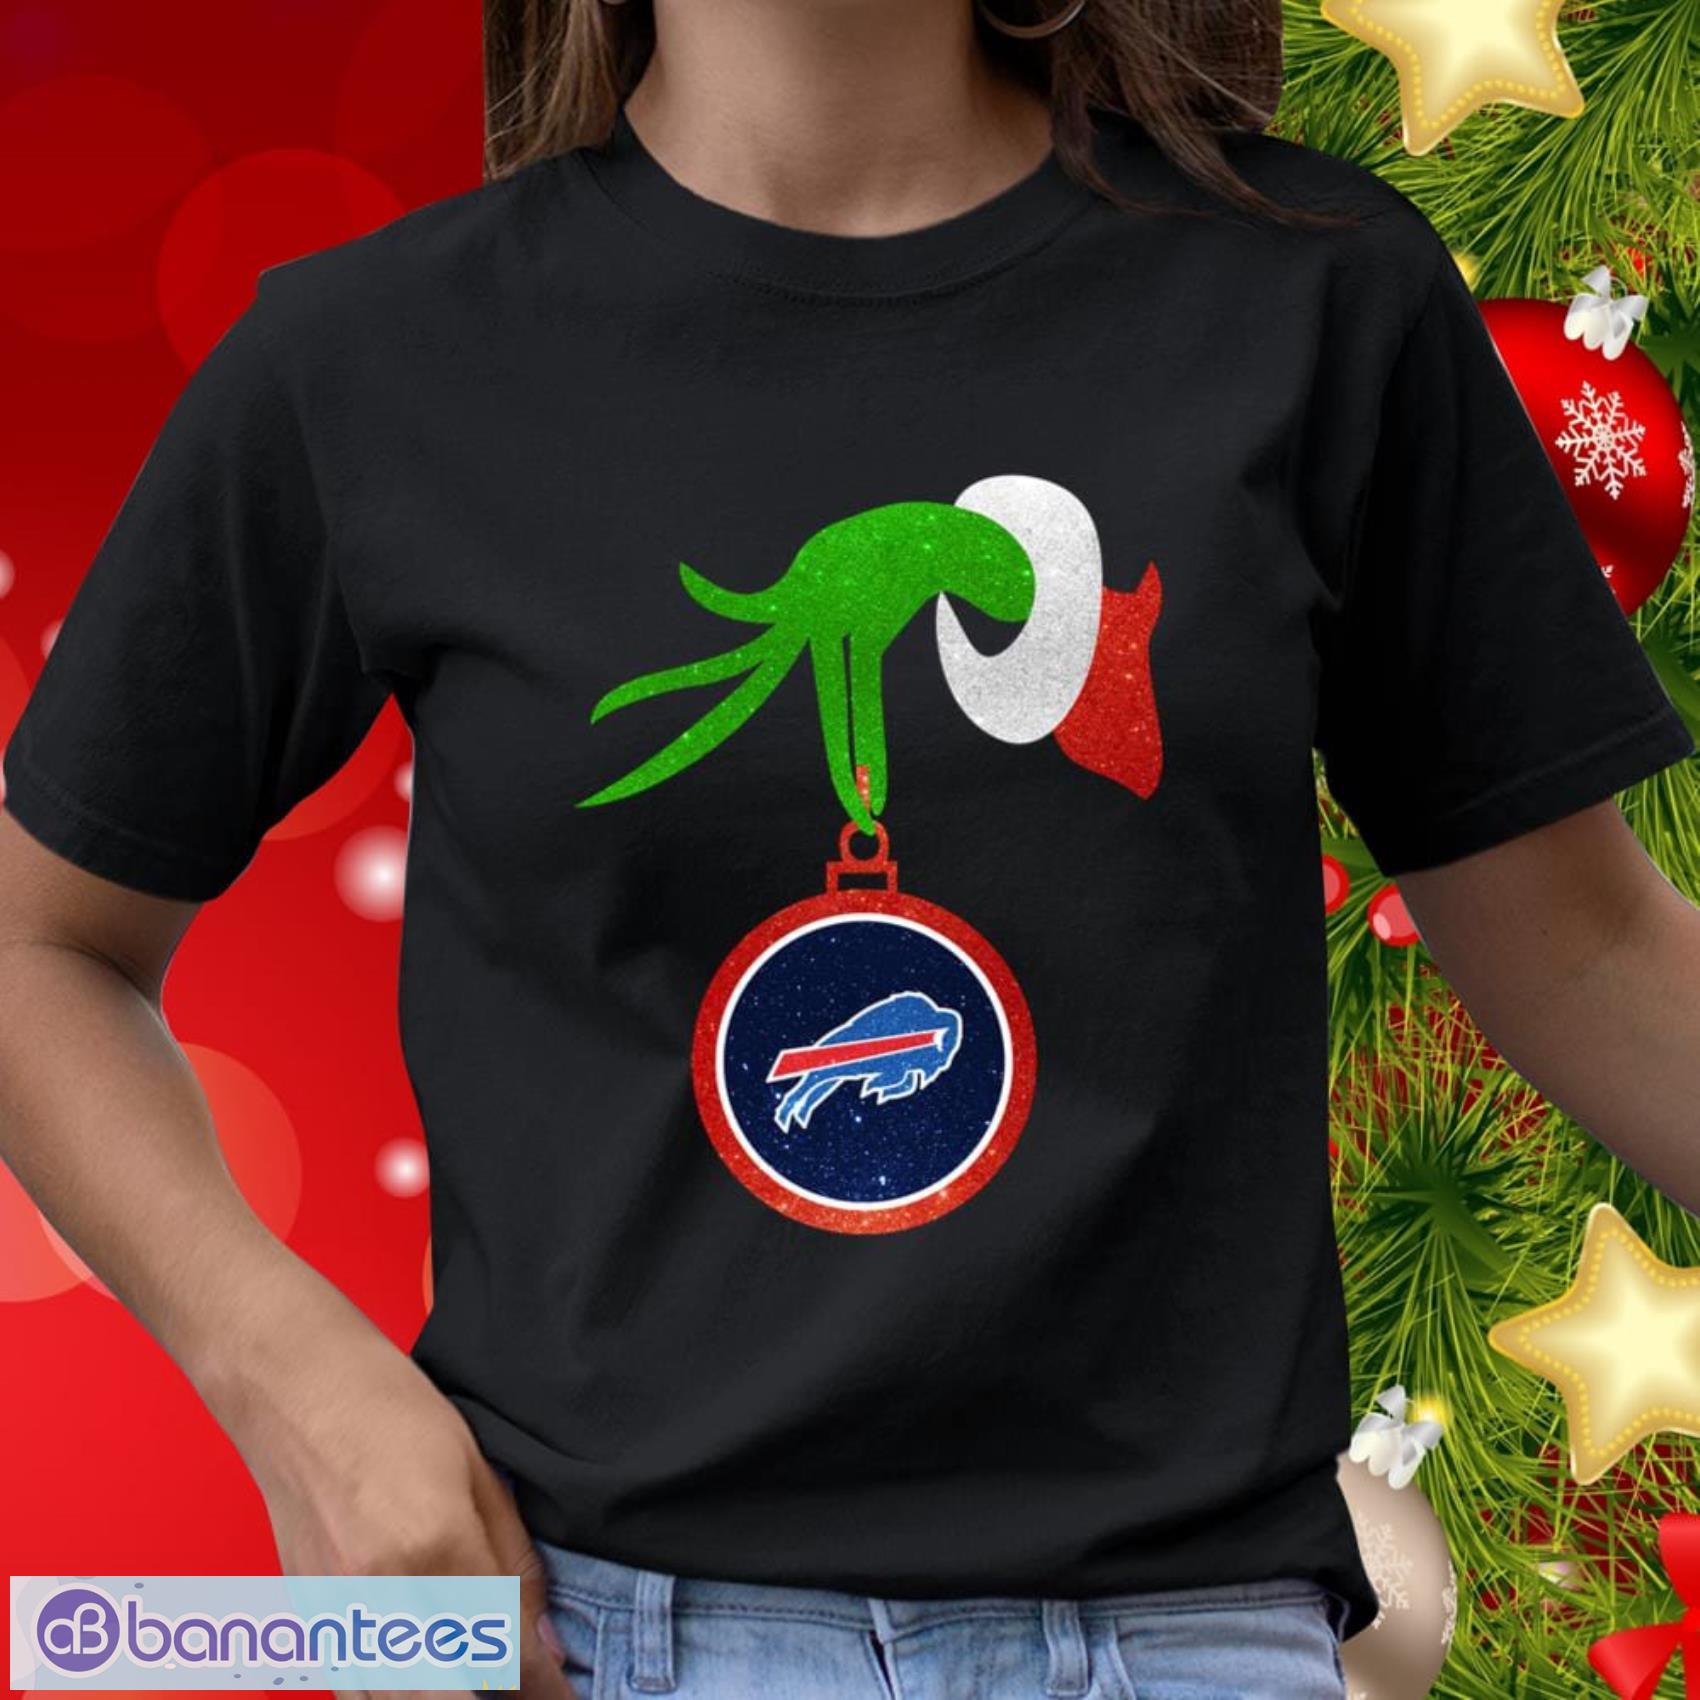 Buffalo Bills Grinch Merry Christmas NFL Football Gift Fr Fans T Shirt - Buffalo Bills Grinch Merry Christmas NFL Football T Shirt_2